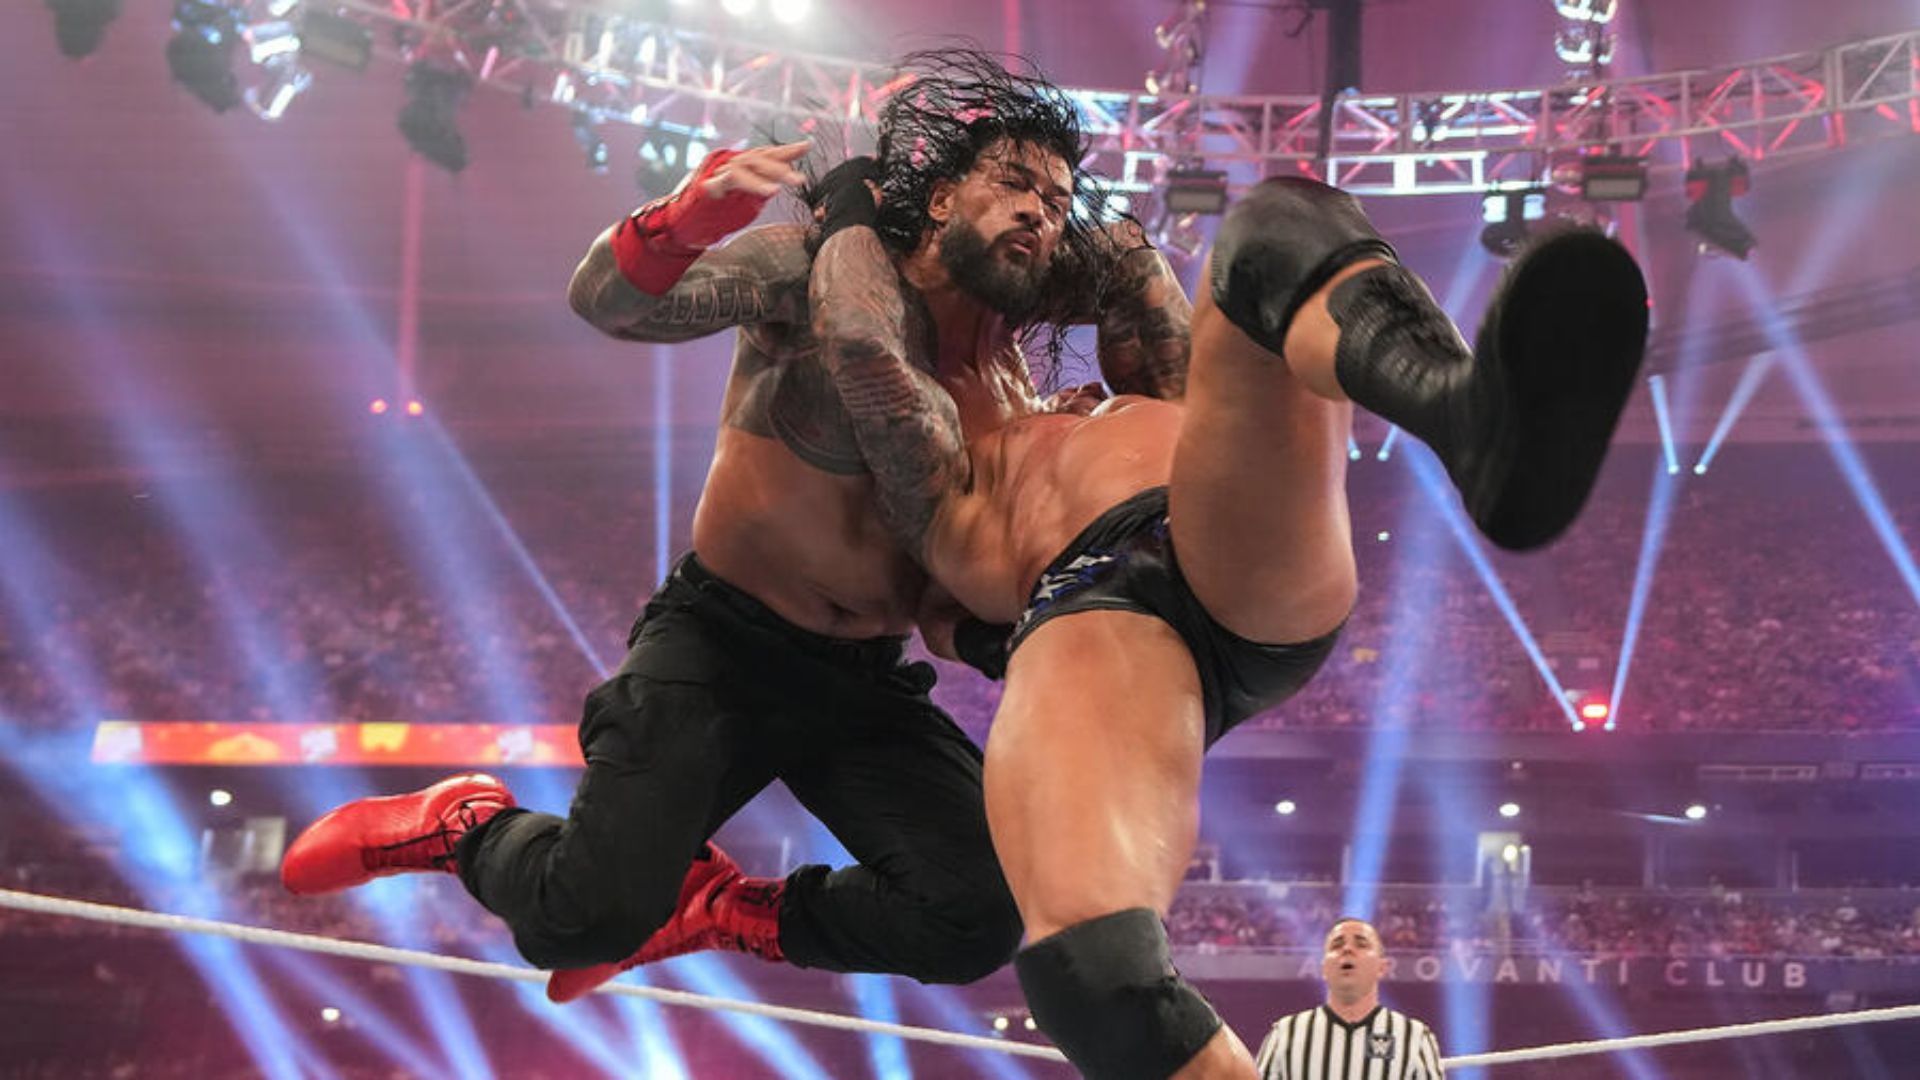 Randy Orton hitting an RKO on Roman Reigns